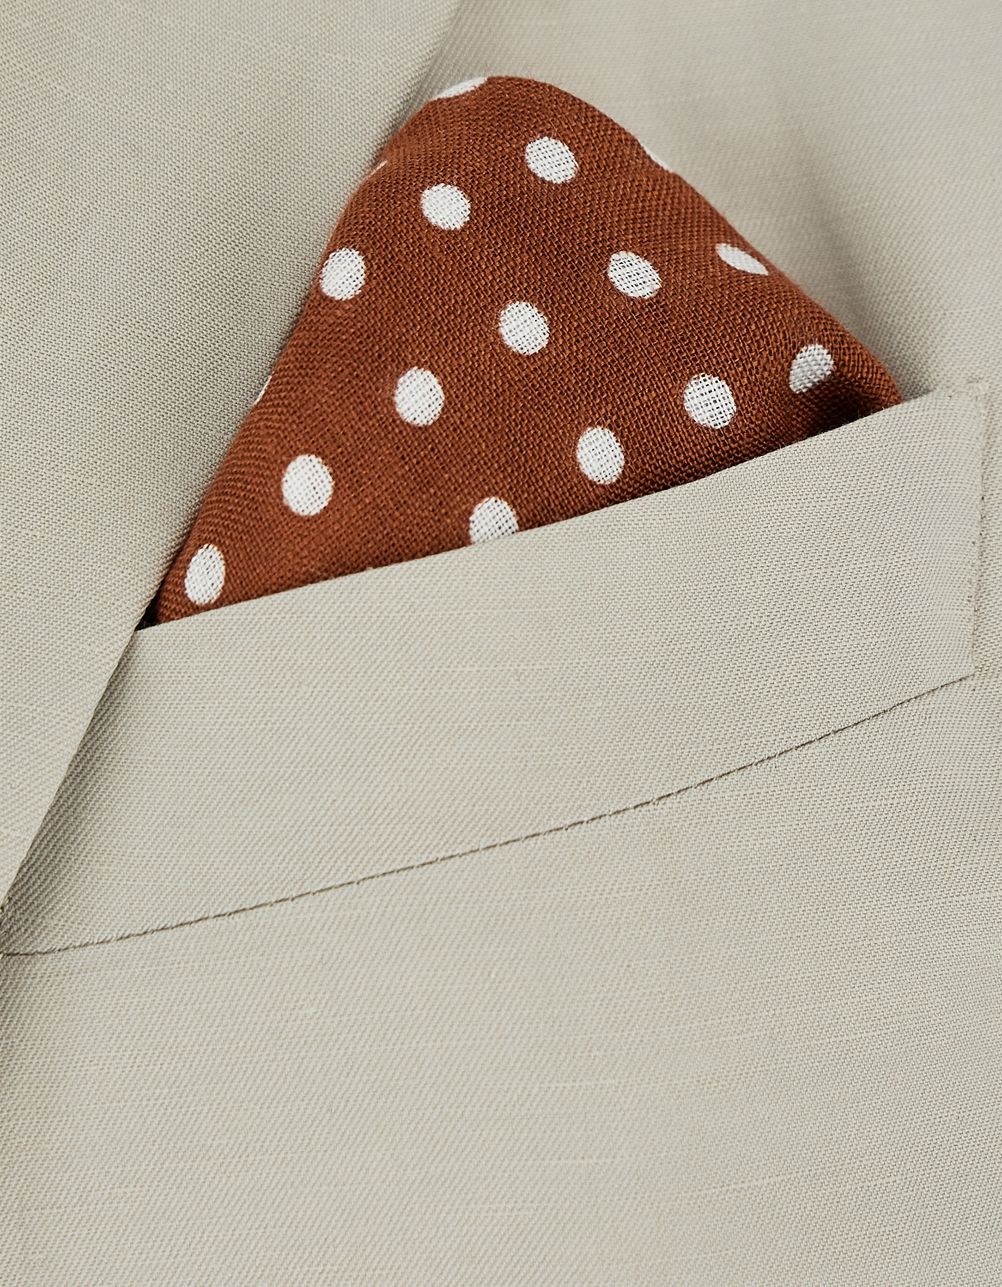 Orange linen pocket square with polka dot pattern